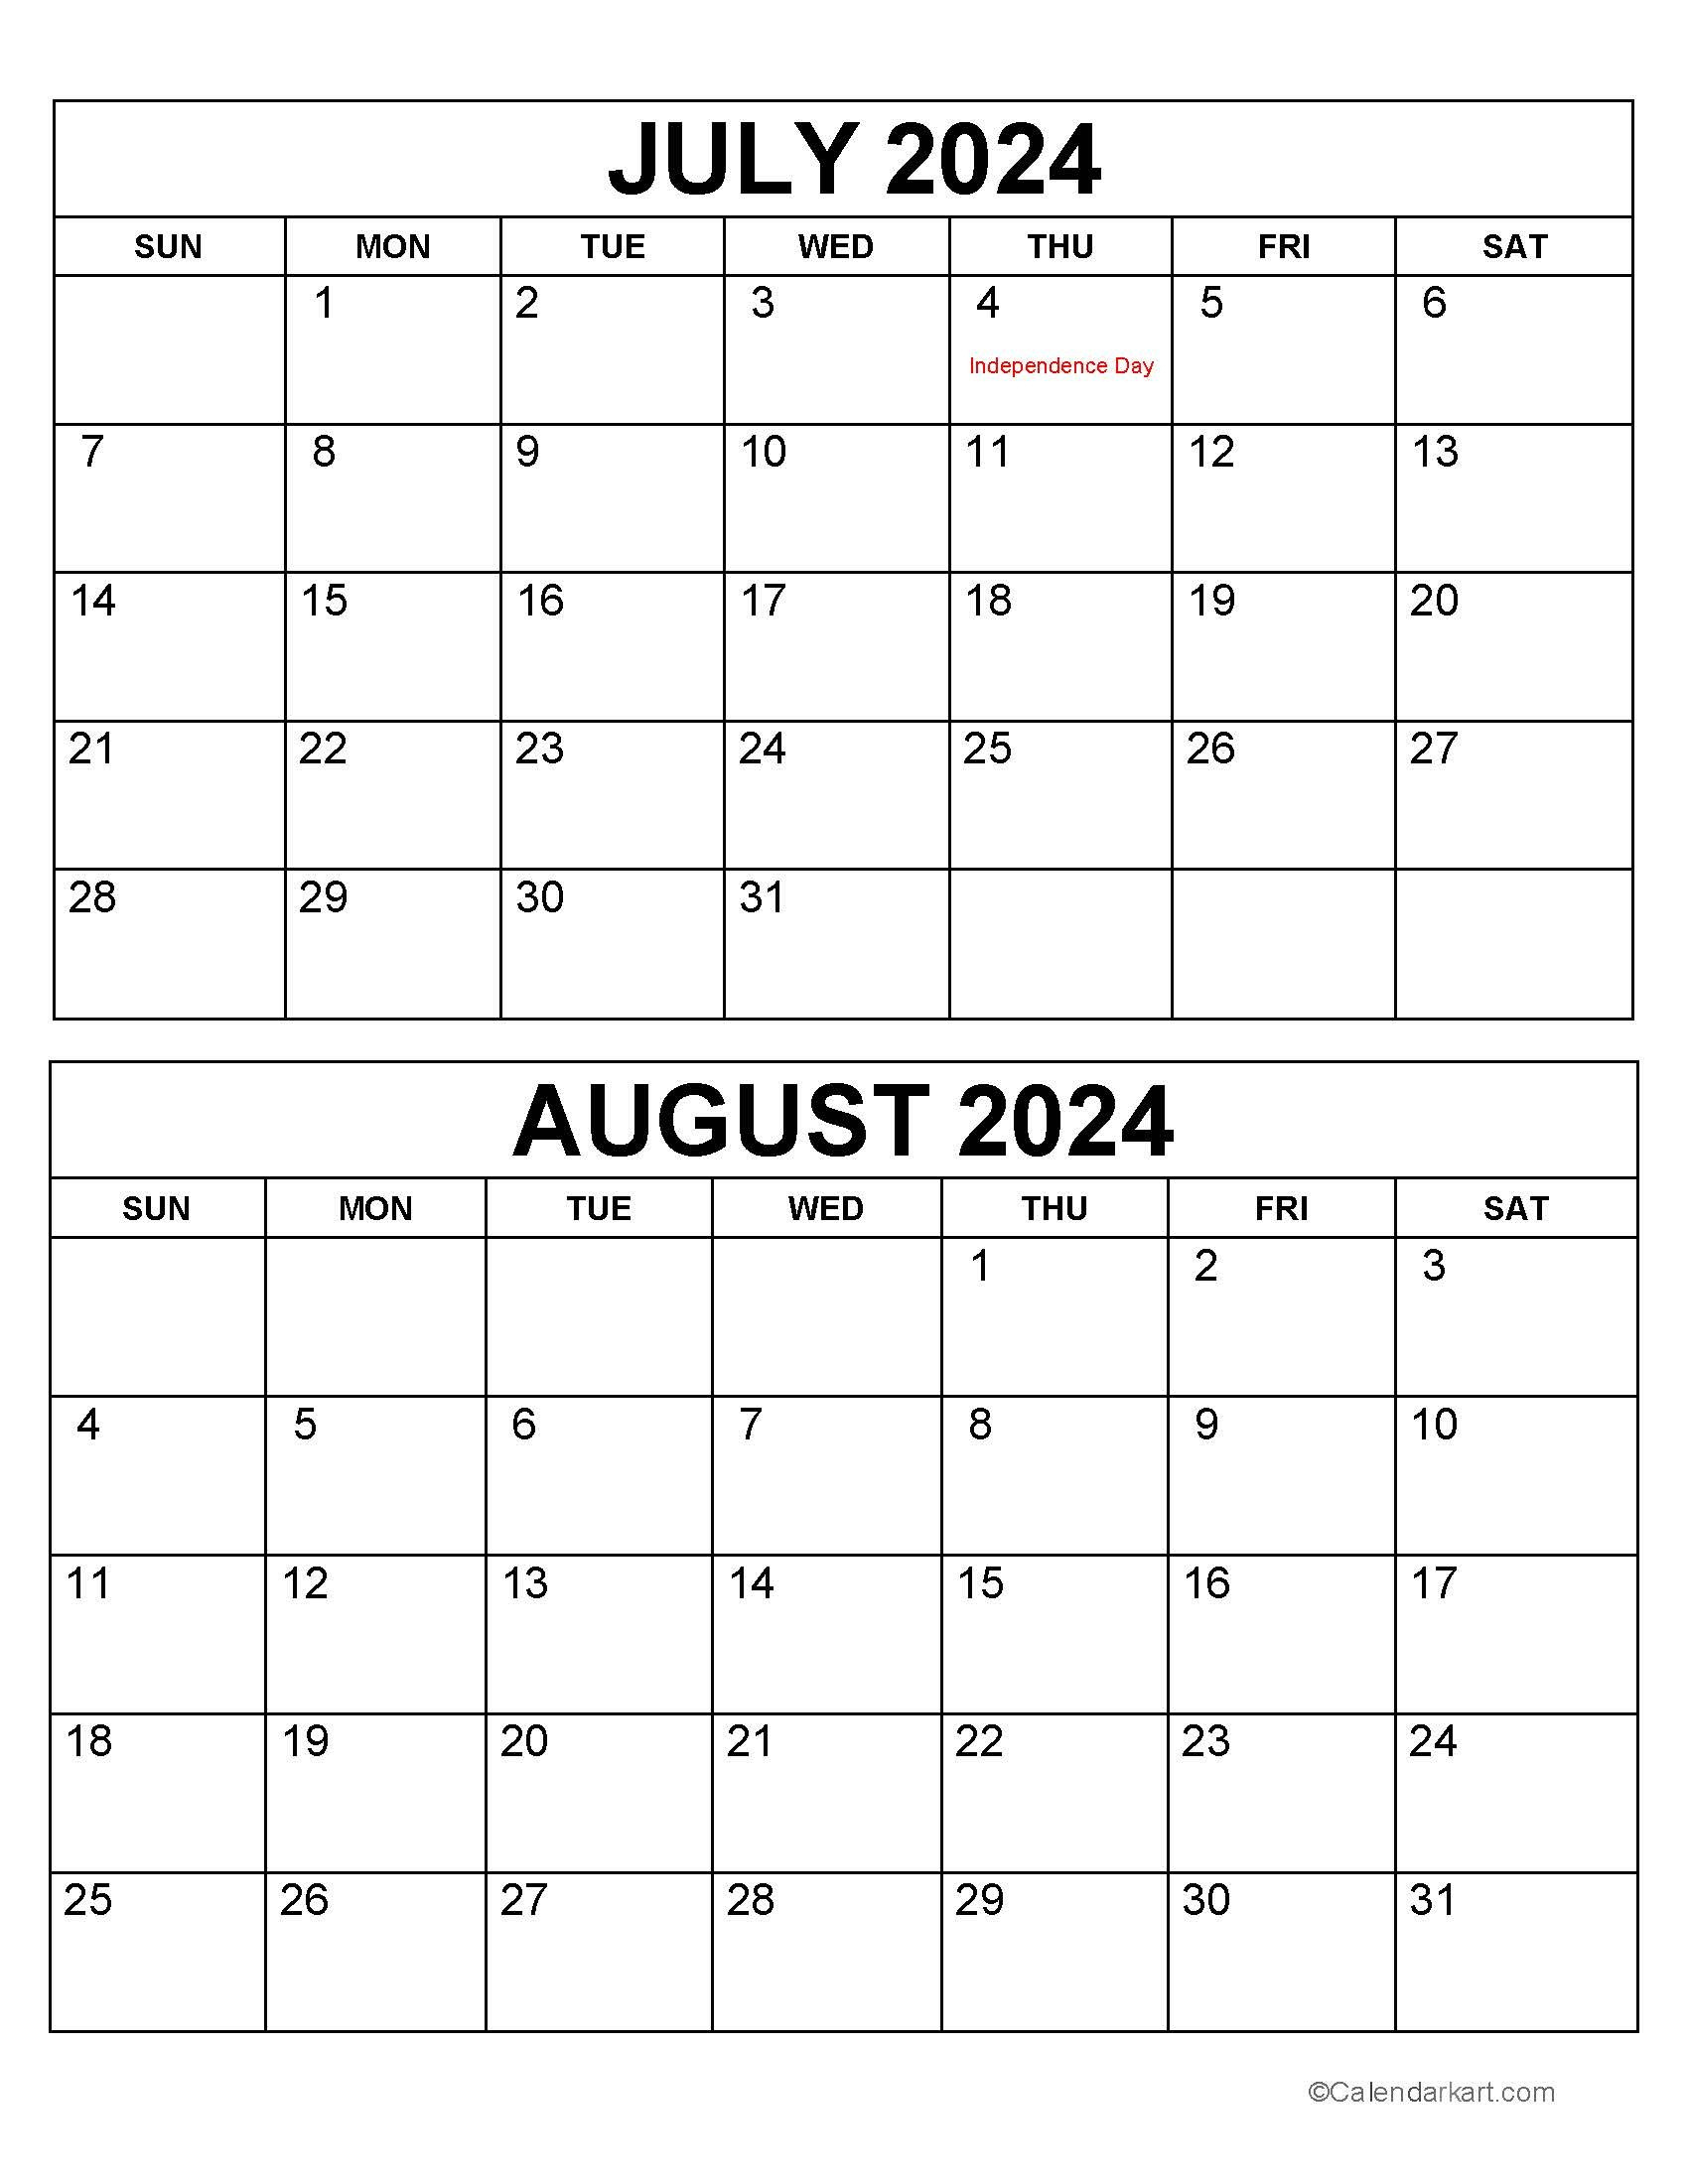 Printable July August 2024 Calendar | Calendarkart in Calendar 2024 July and August